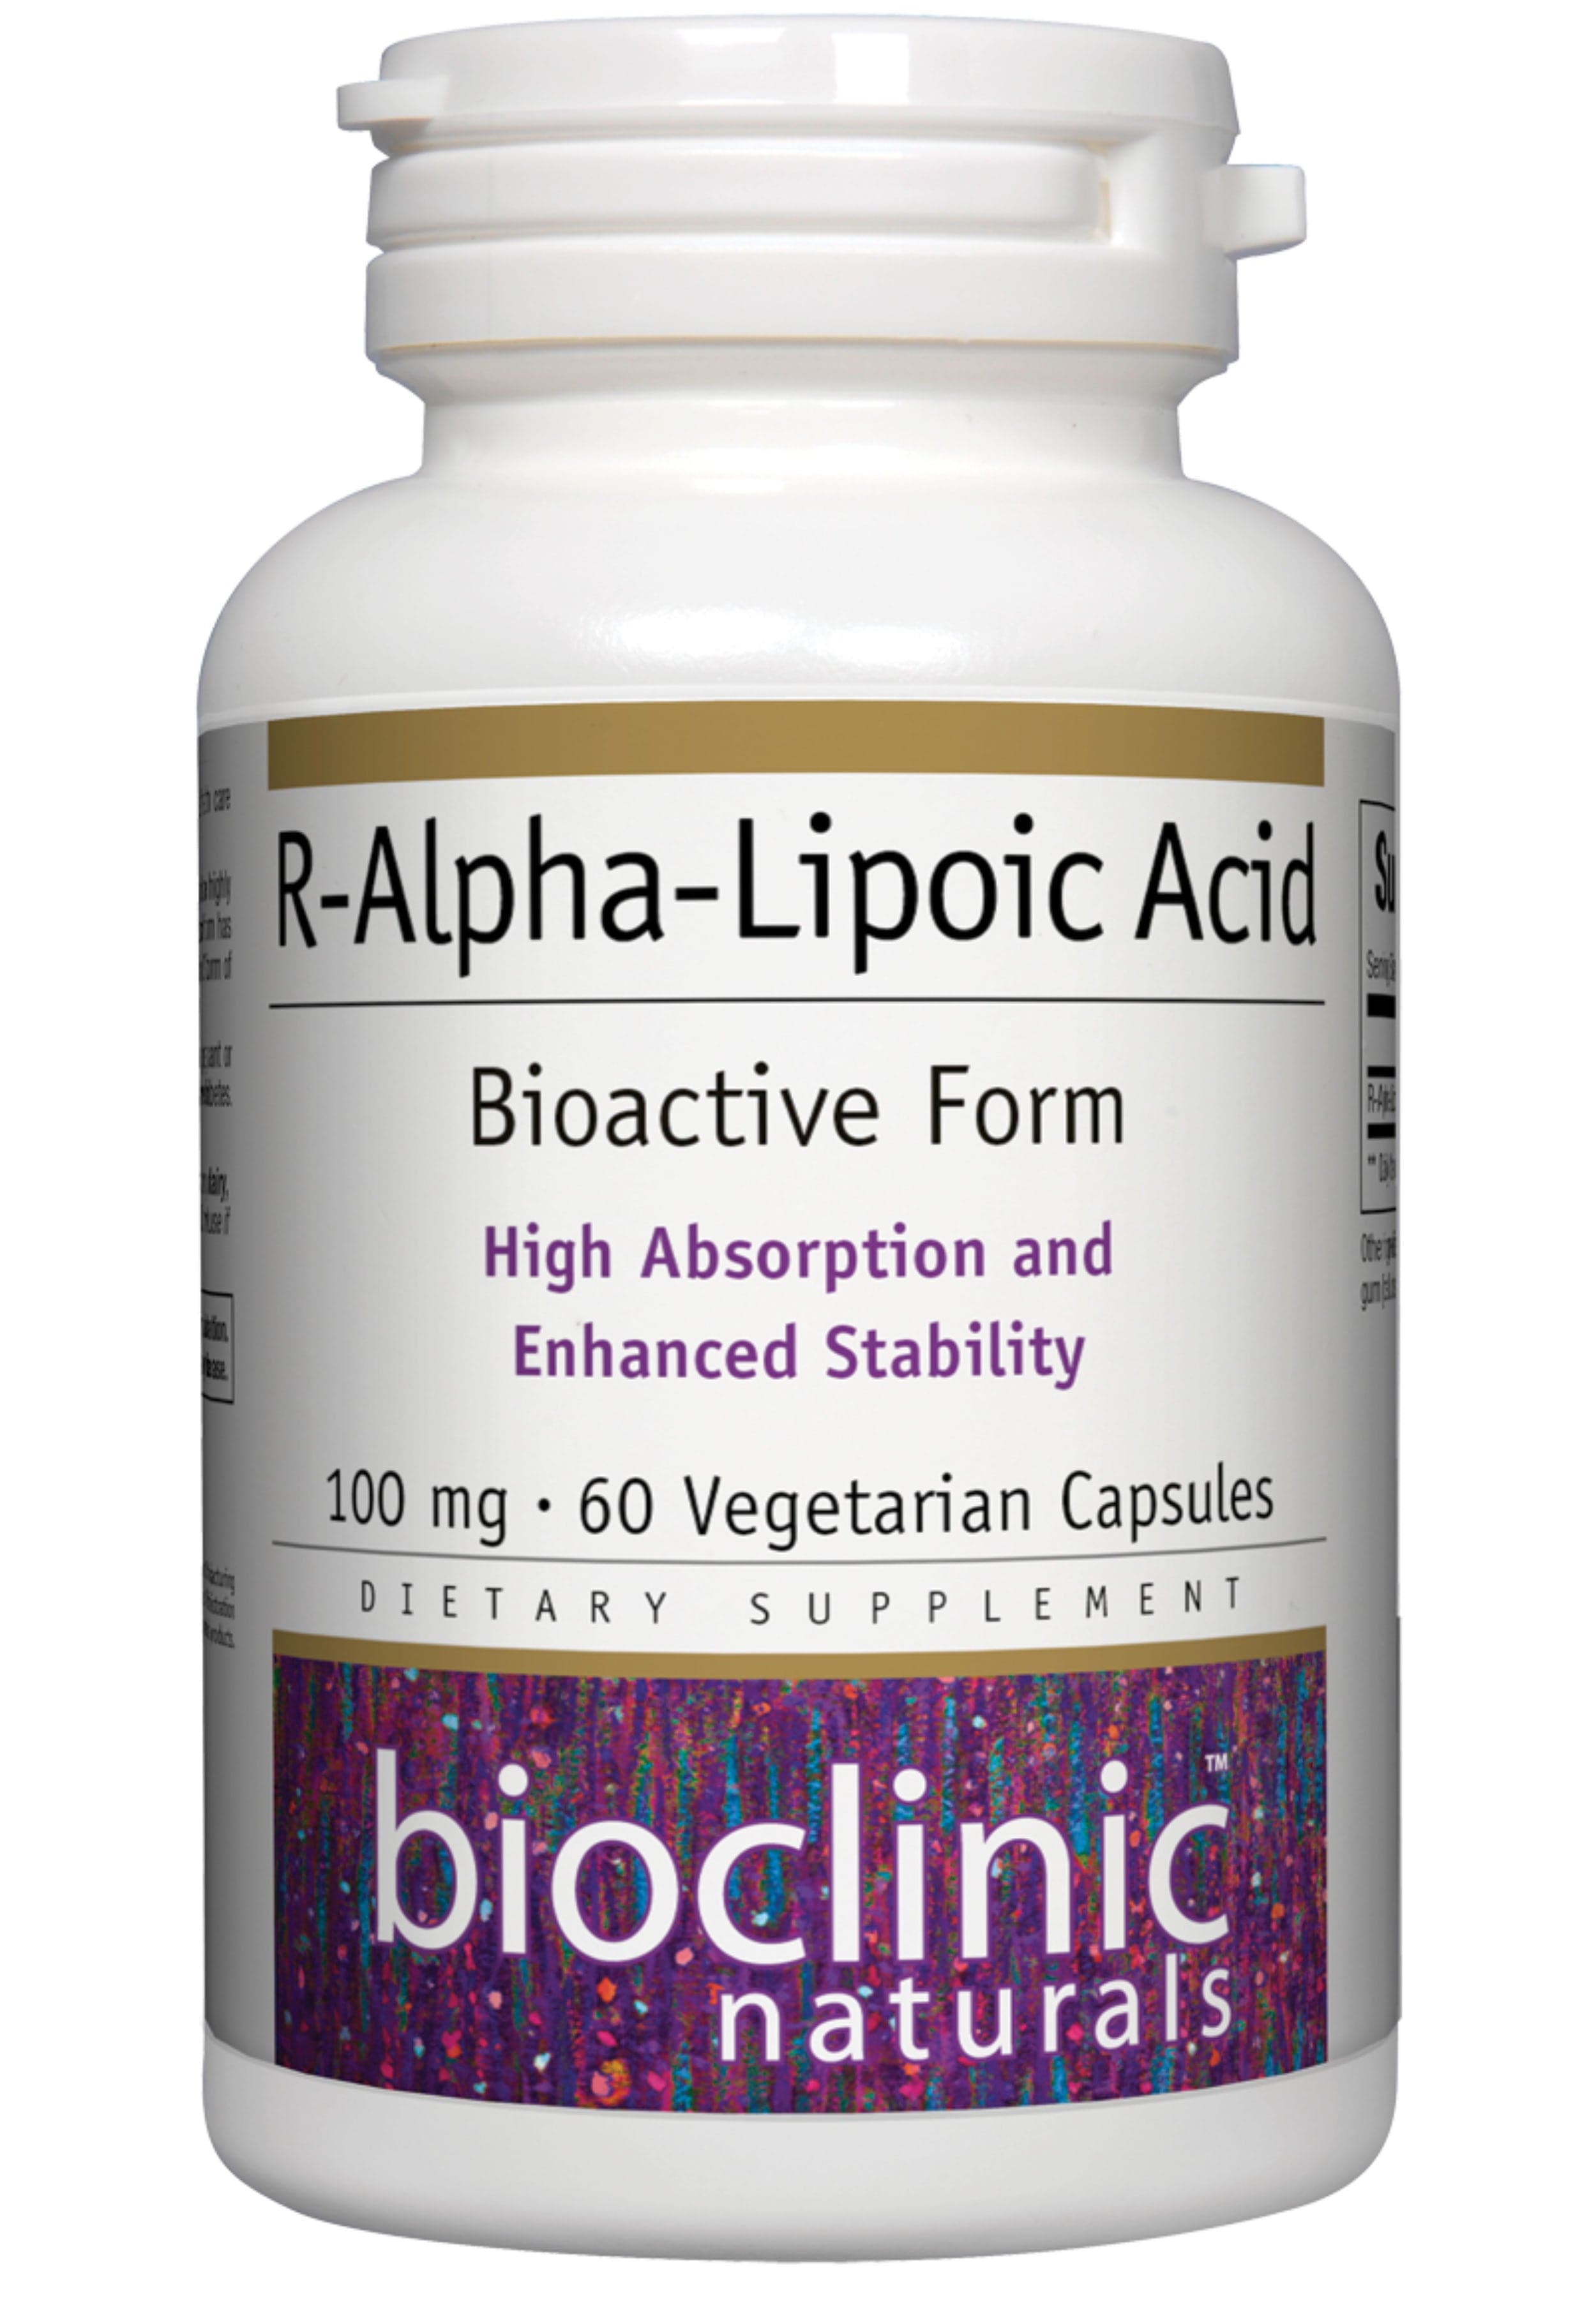 Bioclinic Naturals R-Alpha-Lipoic Acid